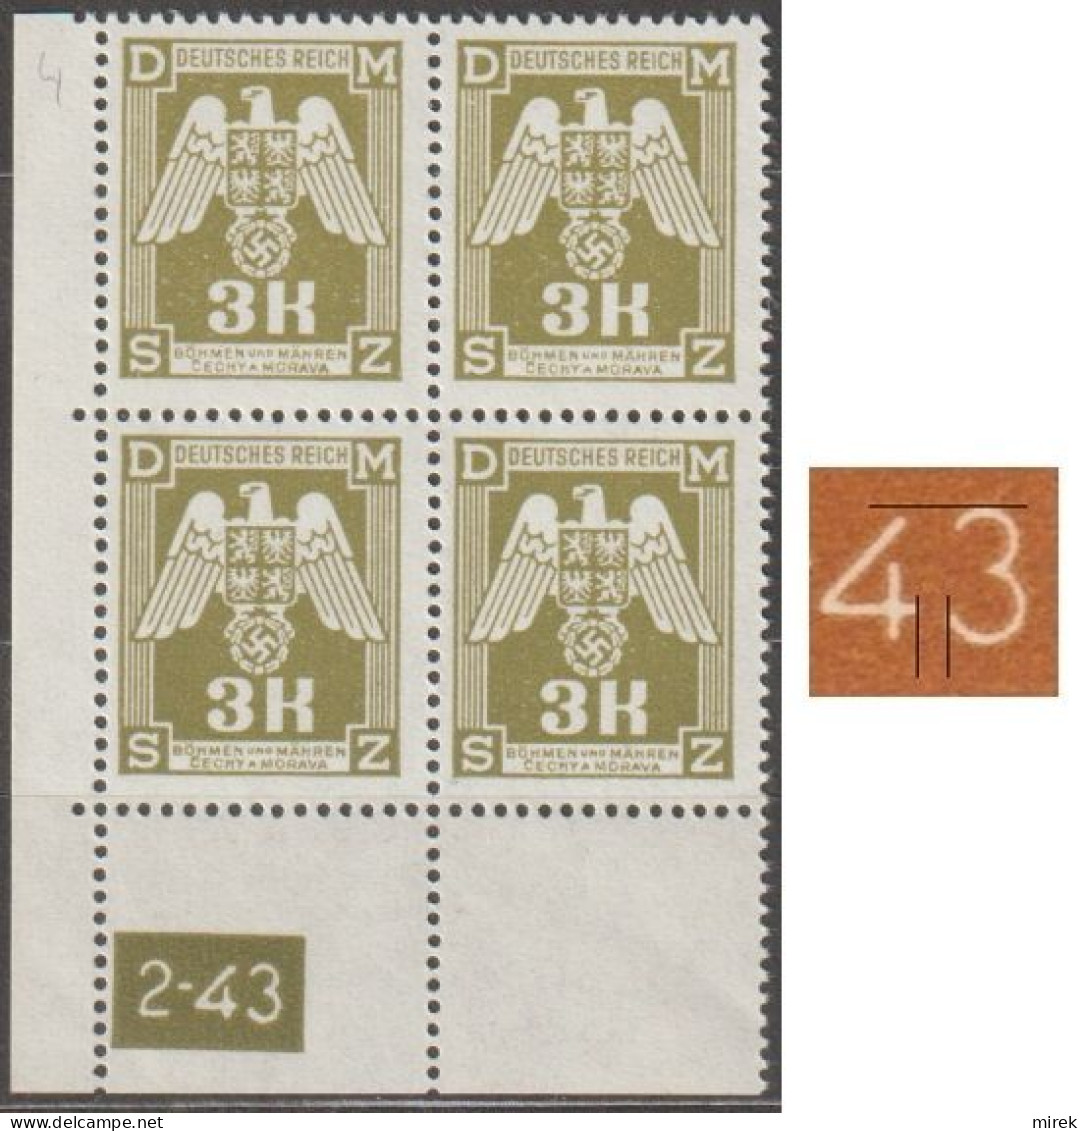 058/ Pof. SL 22, Corner Stamps, Plate Number 2-43, Type 2, Var. 4 - Neufs